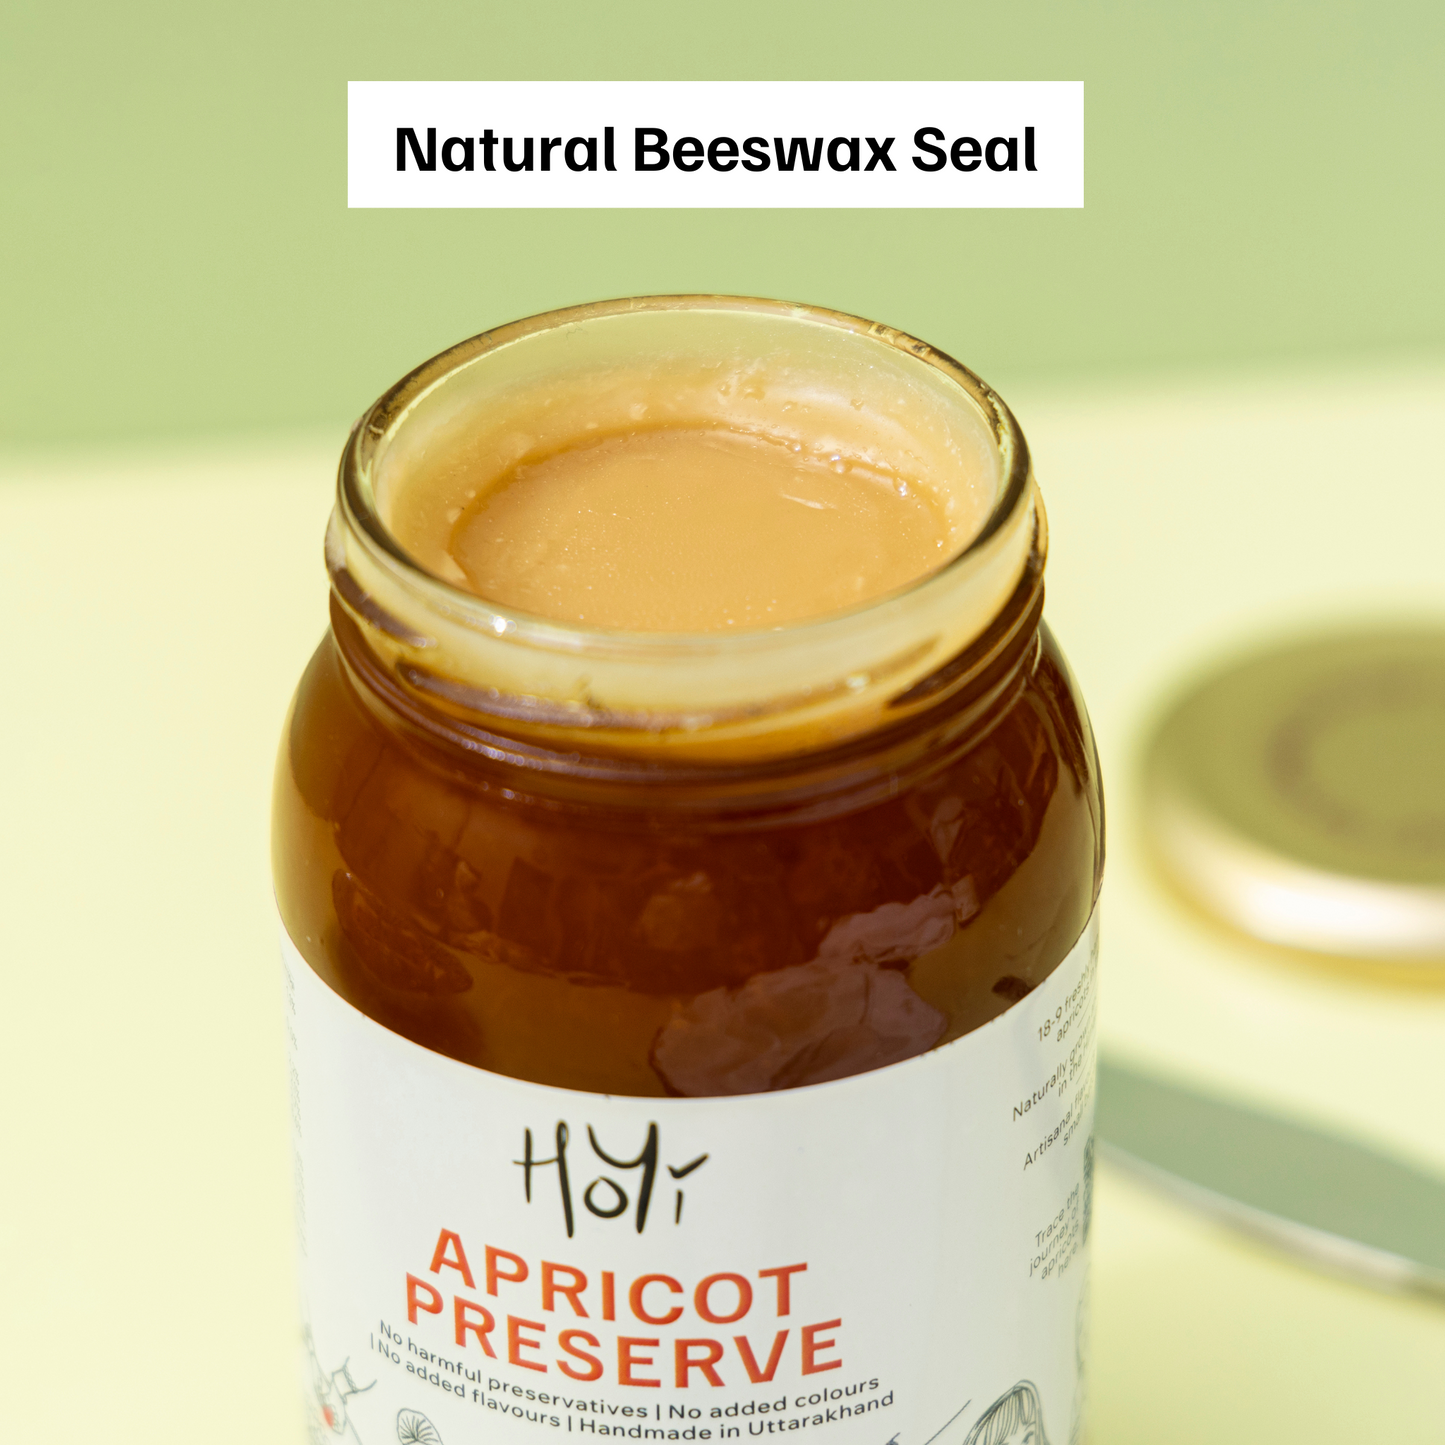 HoYi Apricot Preserve (470gms) Handmade and Organic (Naturally sealed using beeswax)